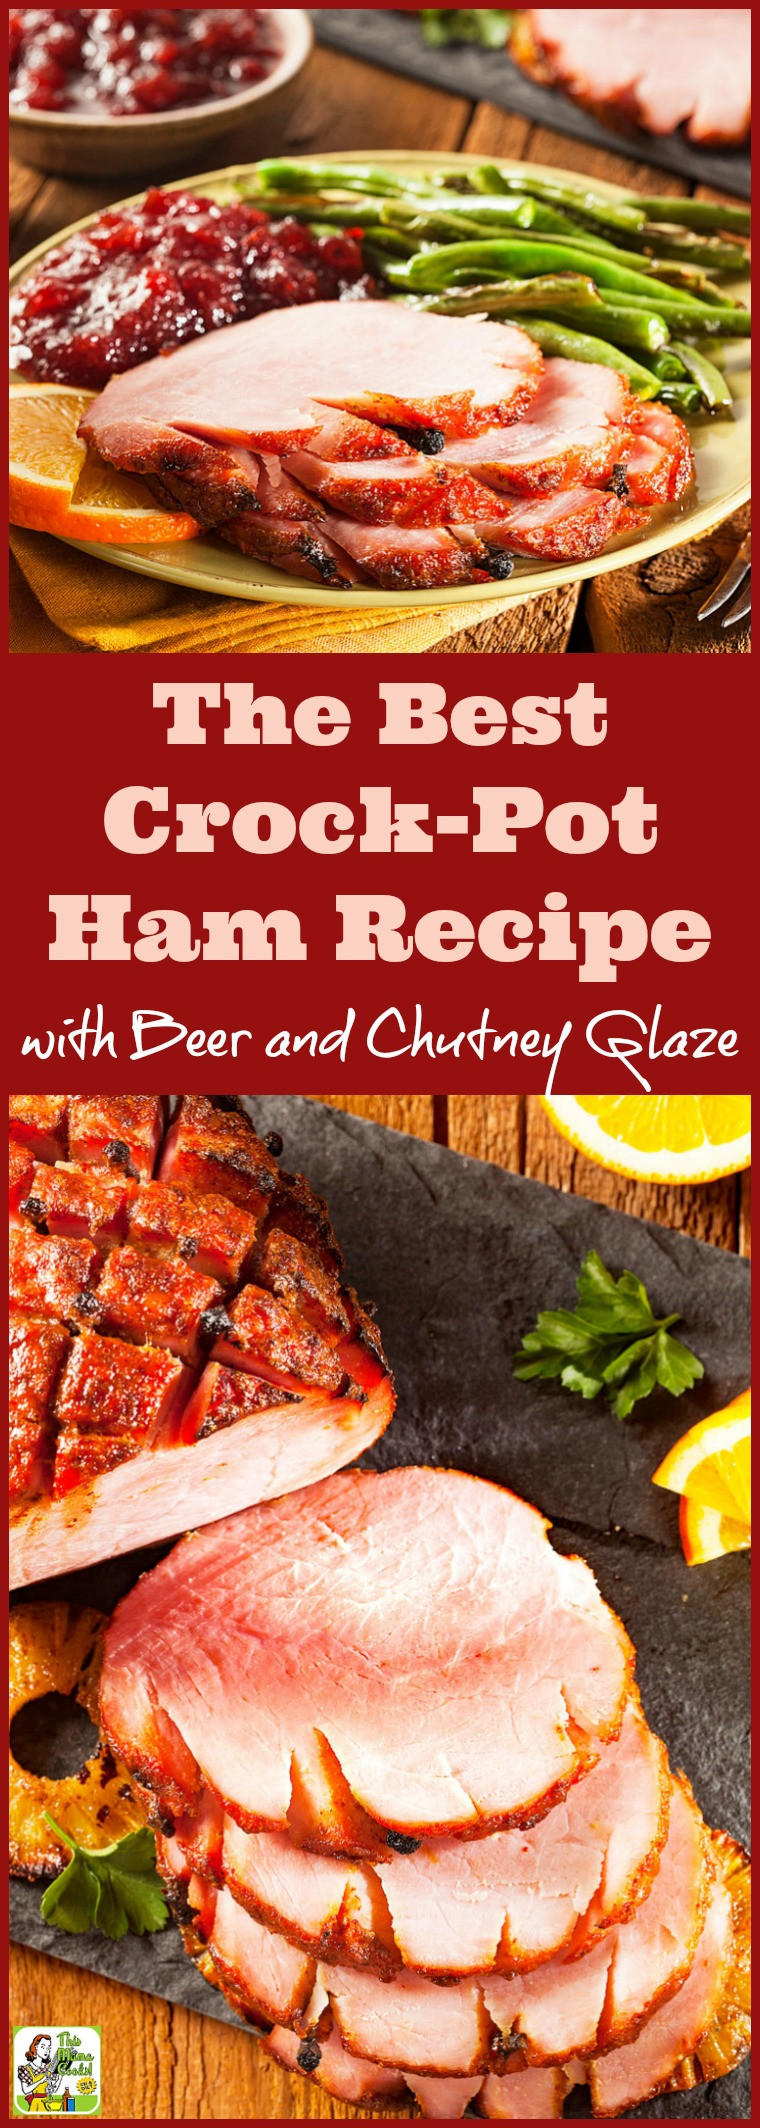 Easter Ham Crock Pot Recipes
 The Best Crock Pot Ham Recipe with Beer and Chutney Glaze